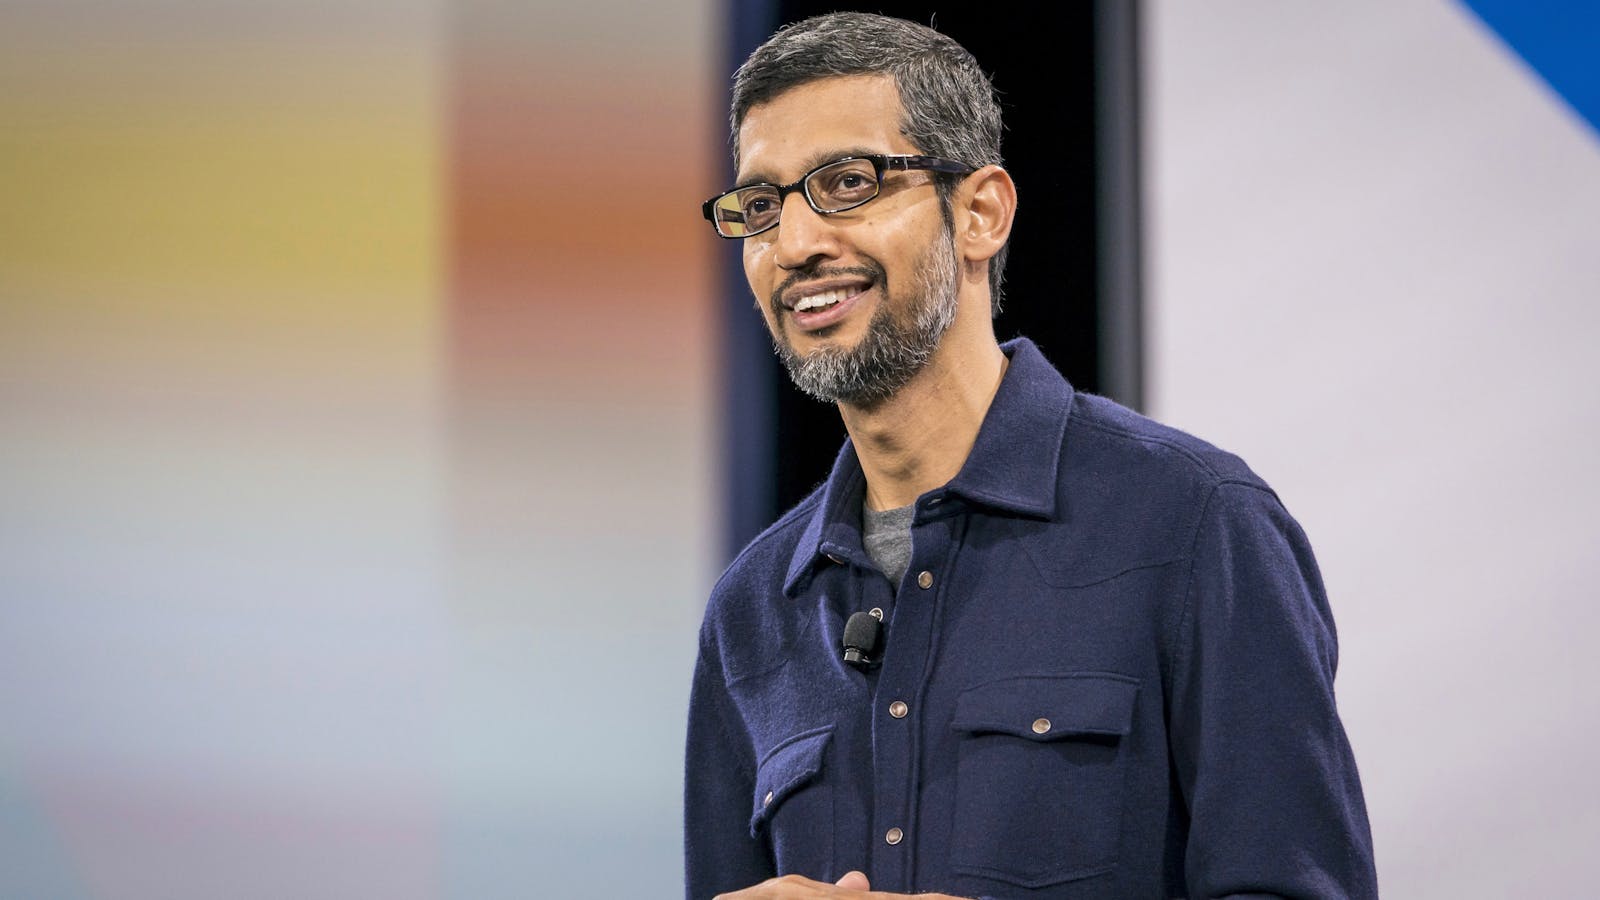 Google CEO Sundar Pichai. Photo by Bloomberg